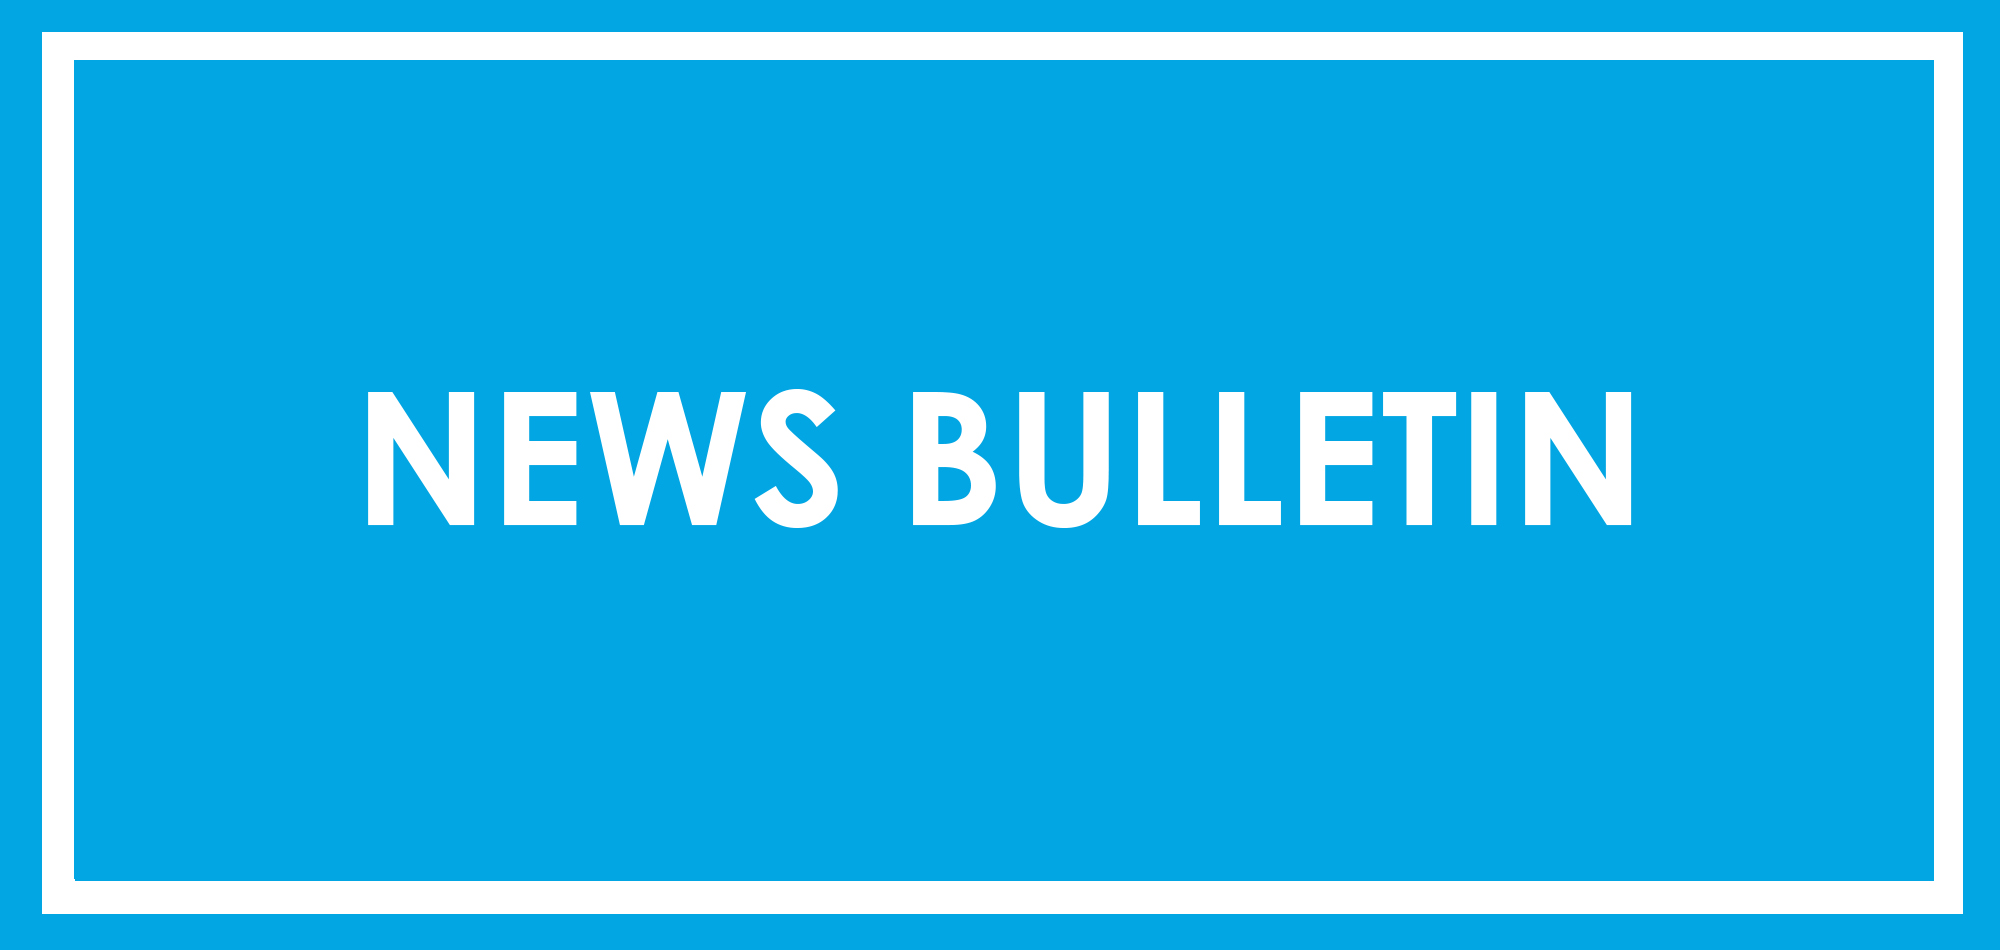 News Bulletin - 06.05.21